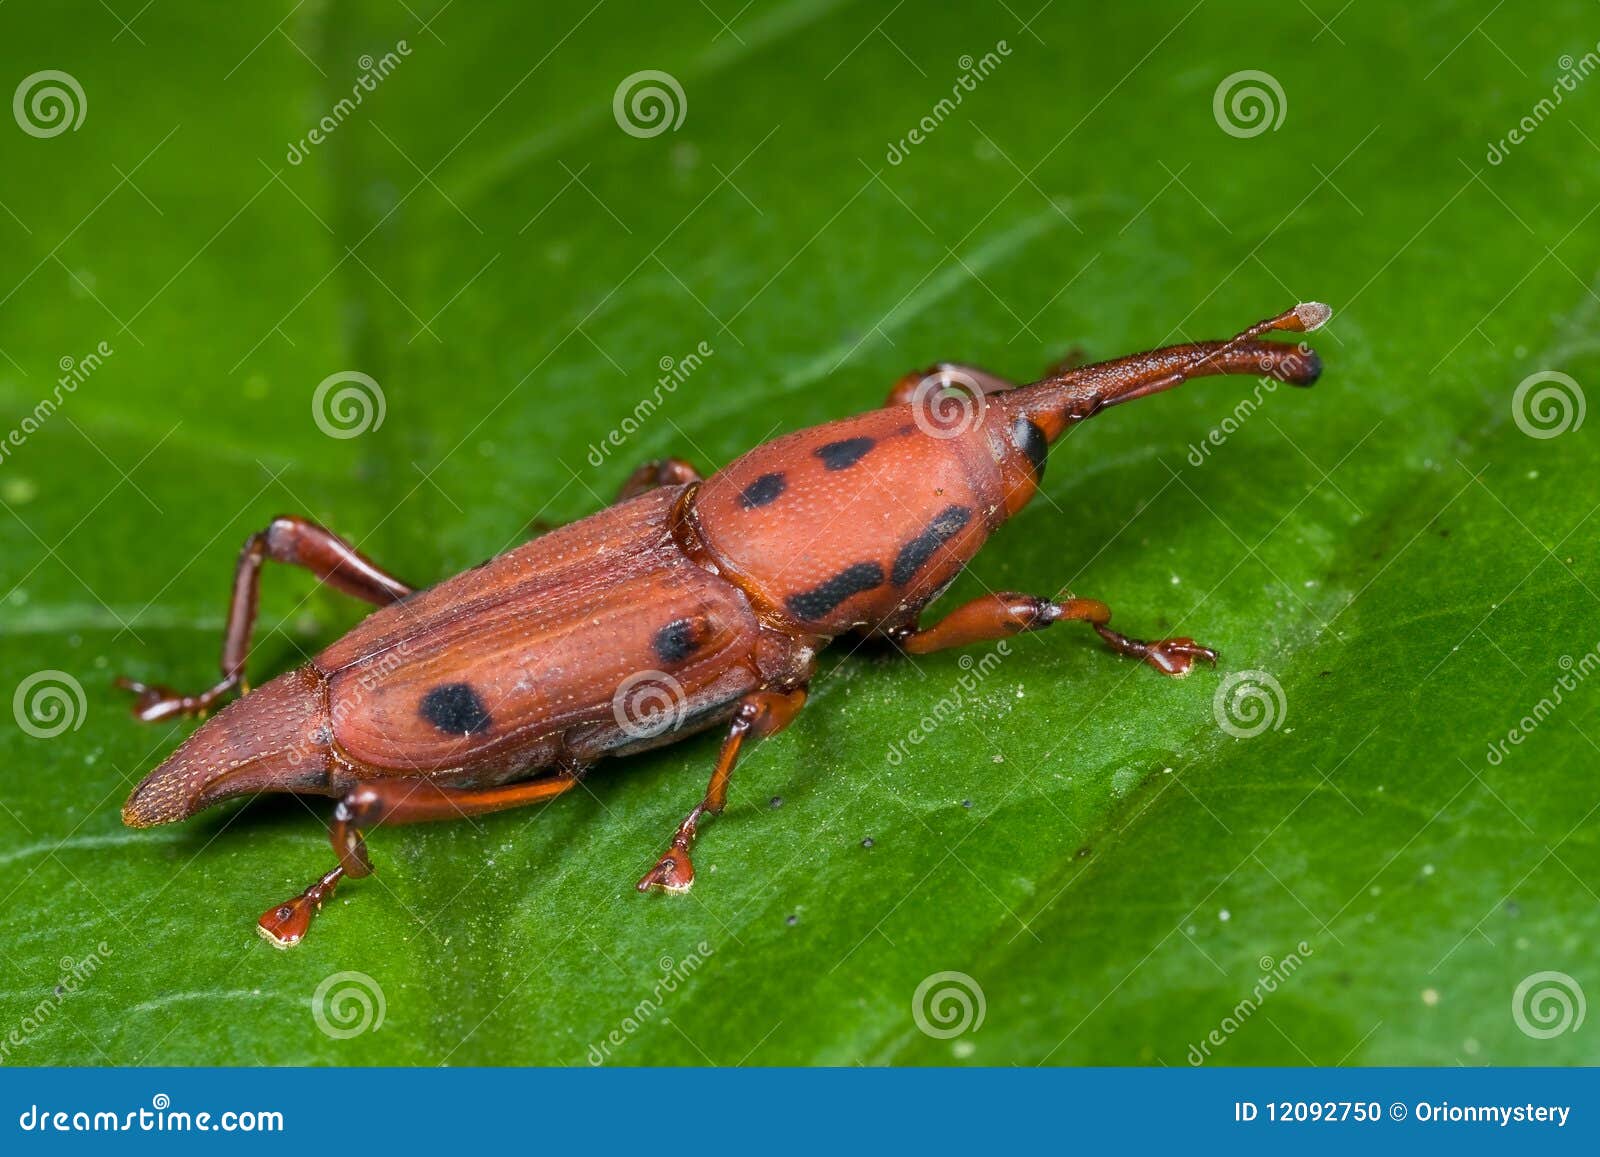 red weevil/snout beetle